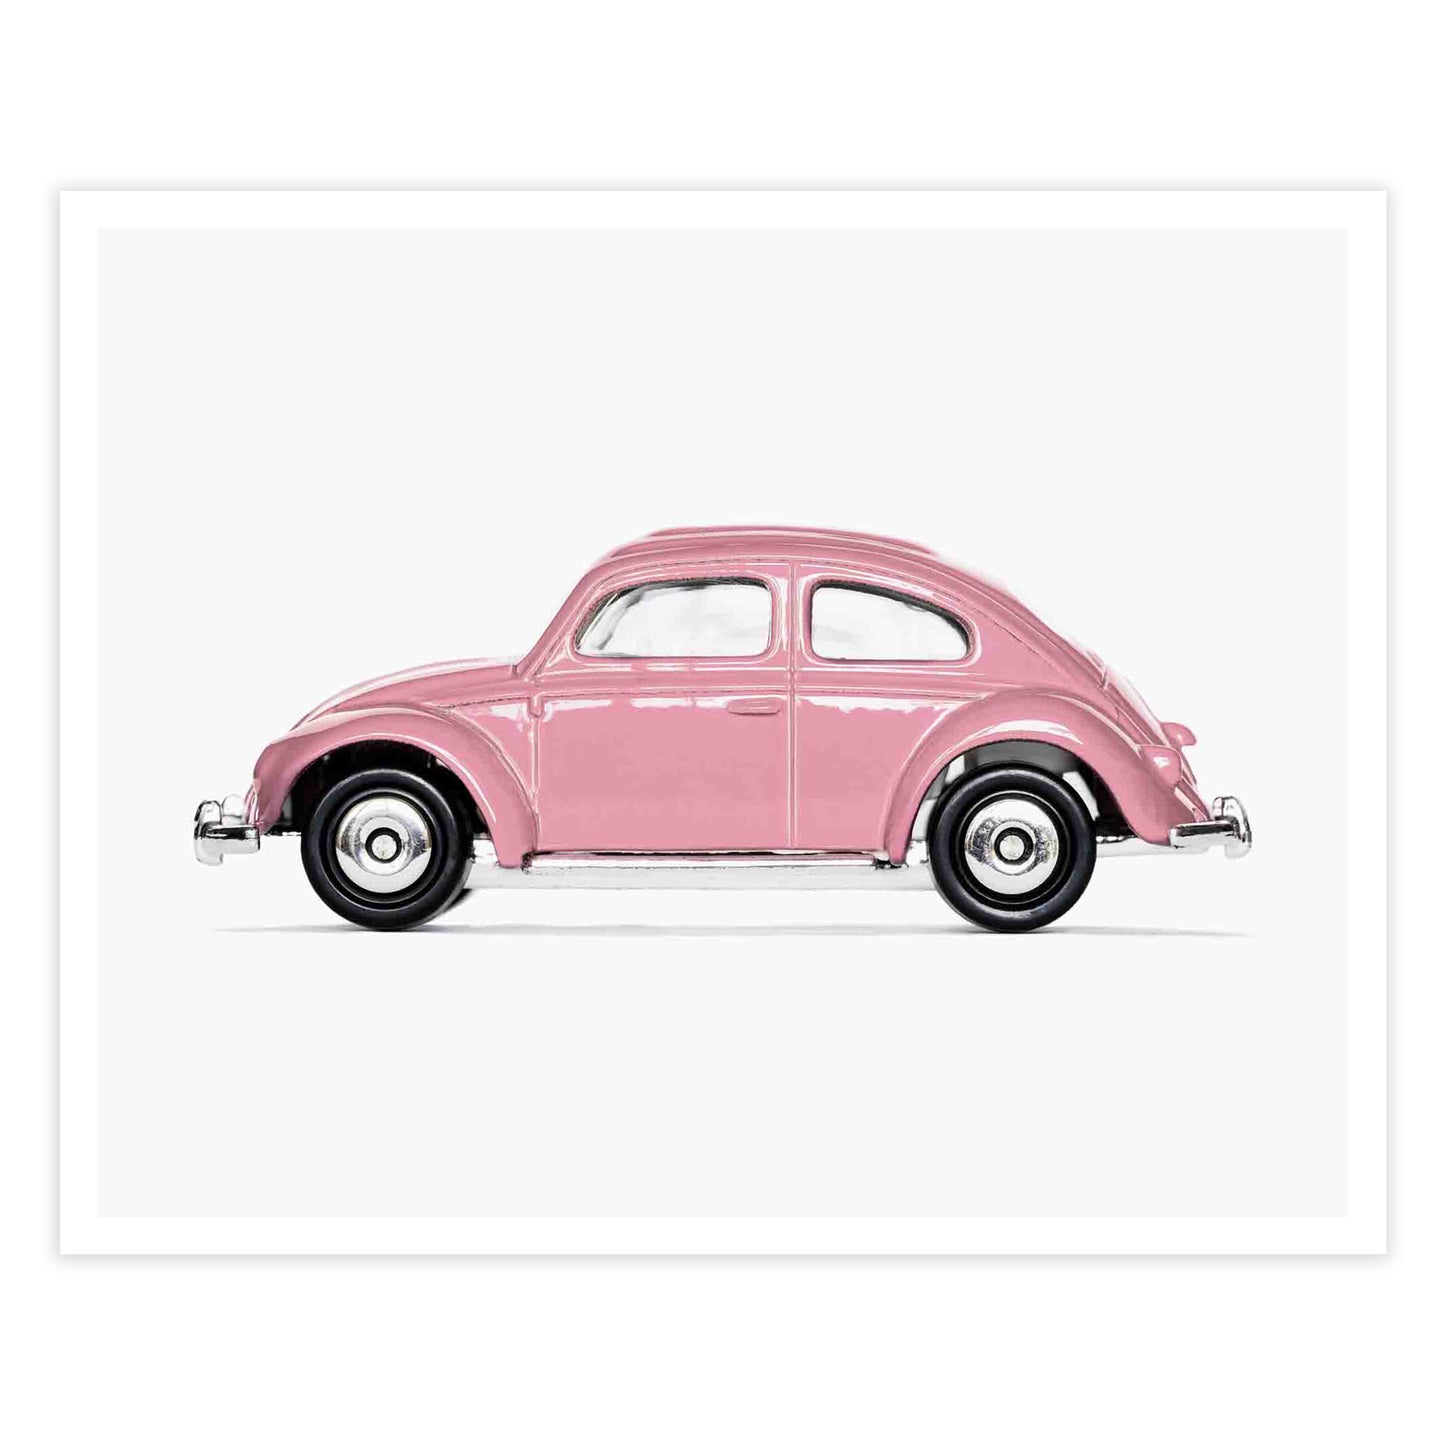 Volkswagen Beetle car art prints for boys nursery